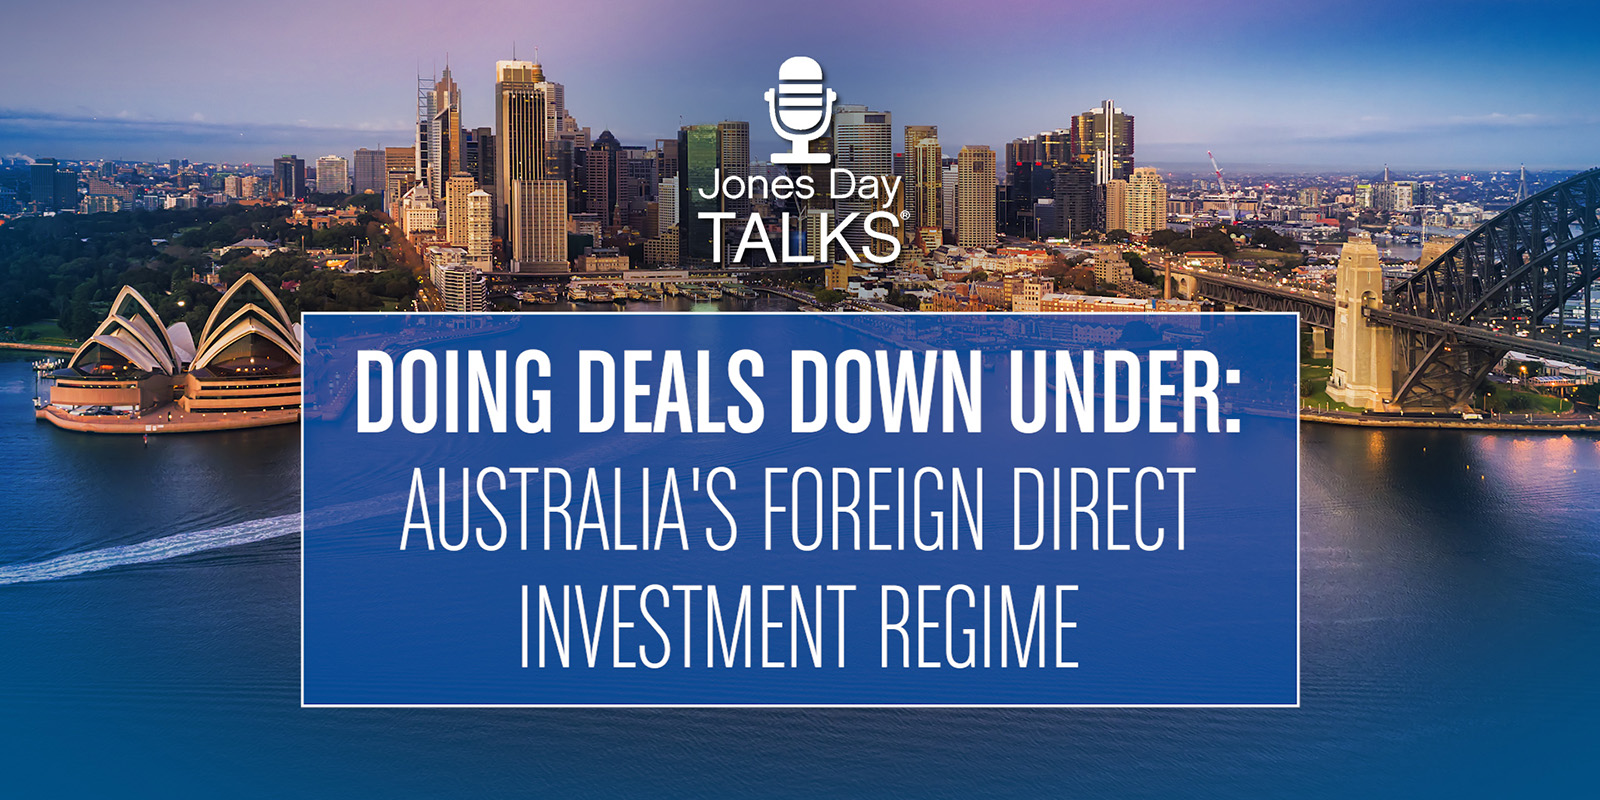  Jones Day Talks: Doing Deals Down Under – Australia’s Foreign Direct Investment Regime  